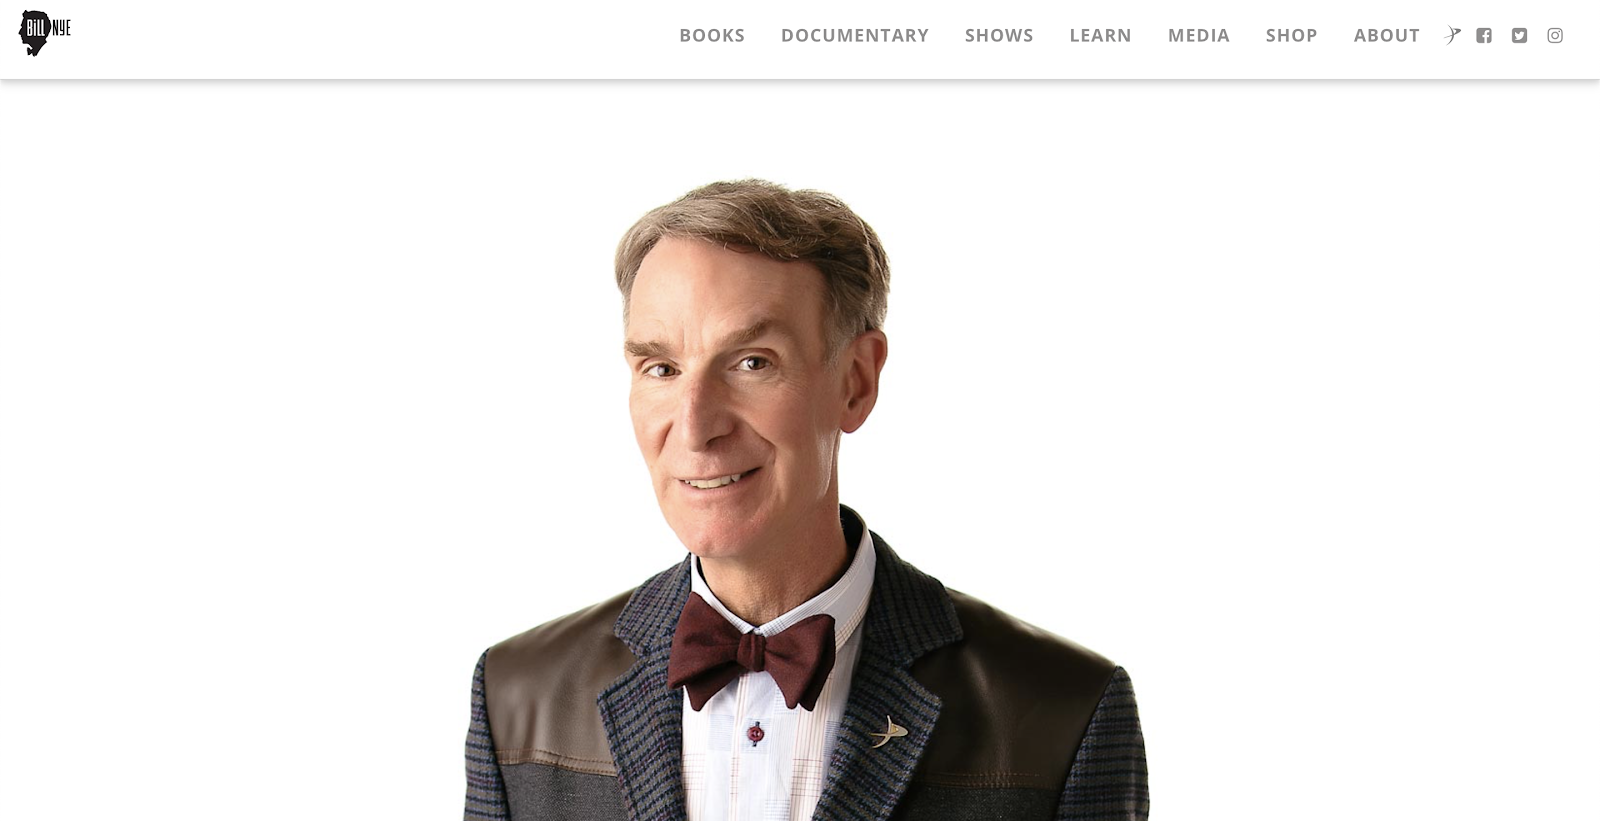 Bill Nye’s website